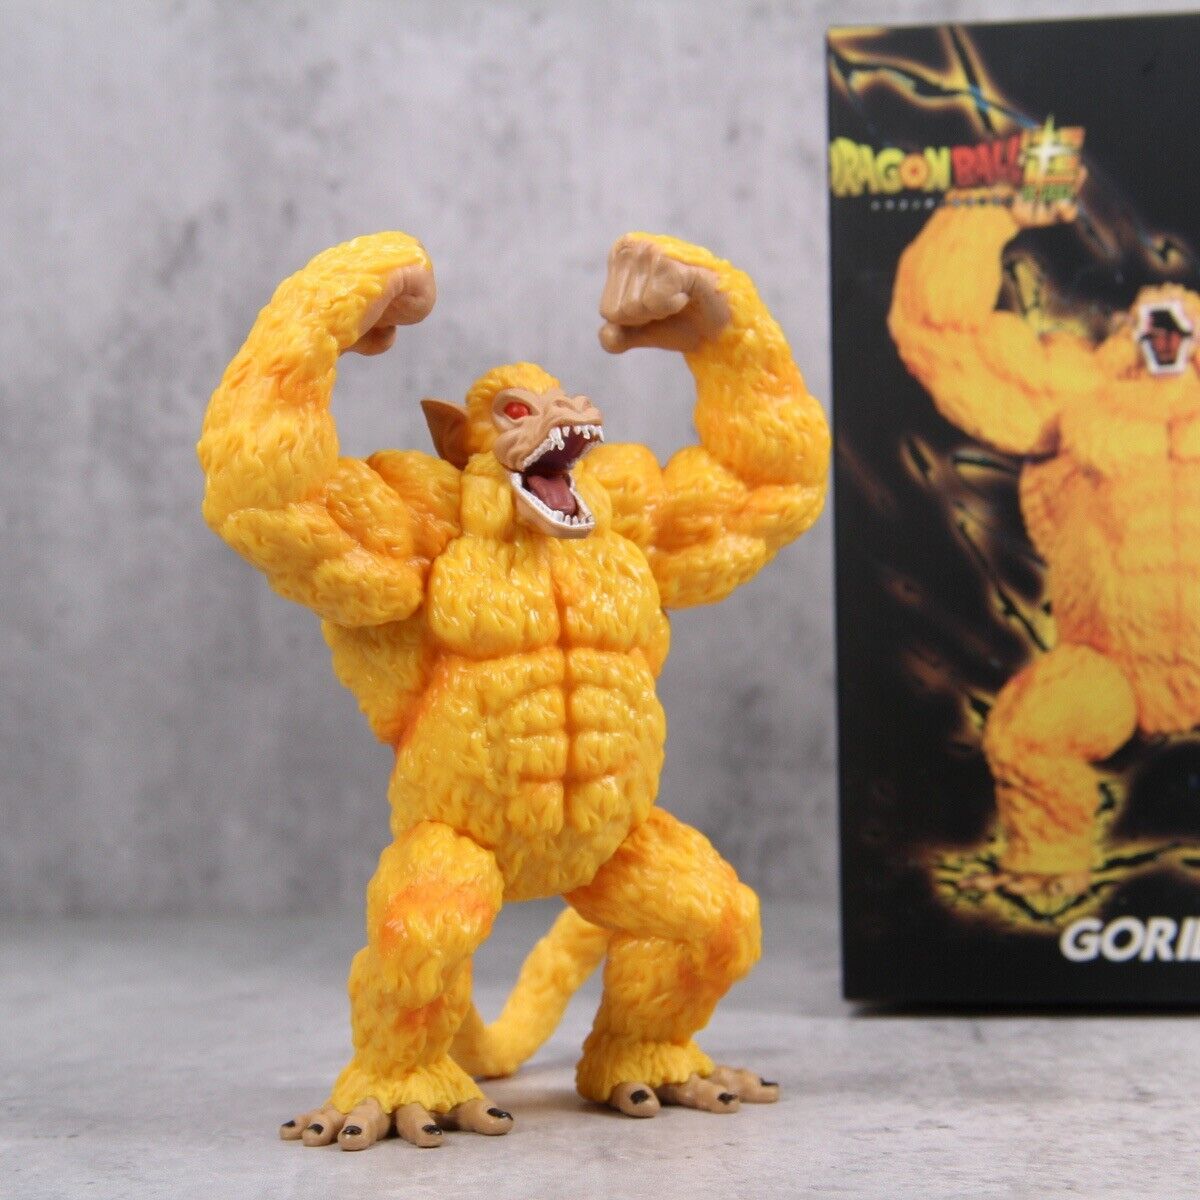 Dragon Ball Z Golden Great Ape Gorilla Figure PVC Statue Model Toy  In stock 